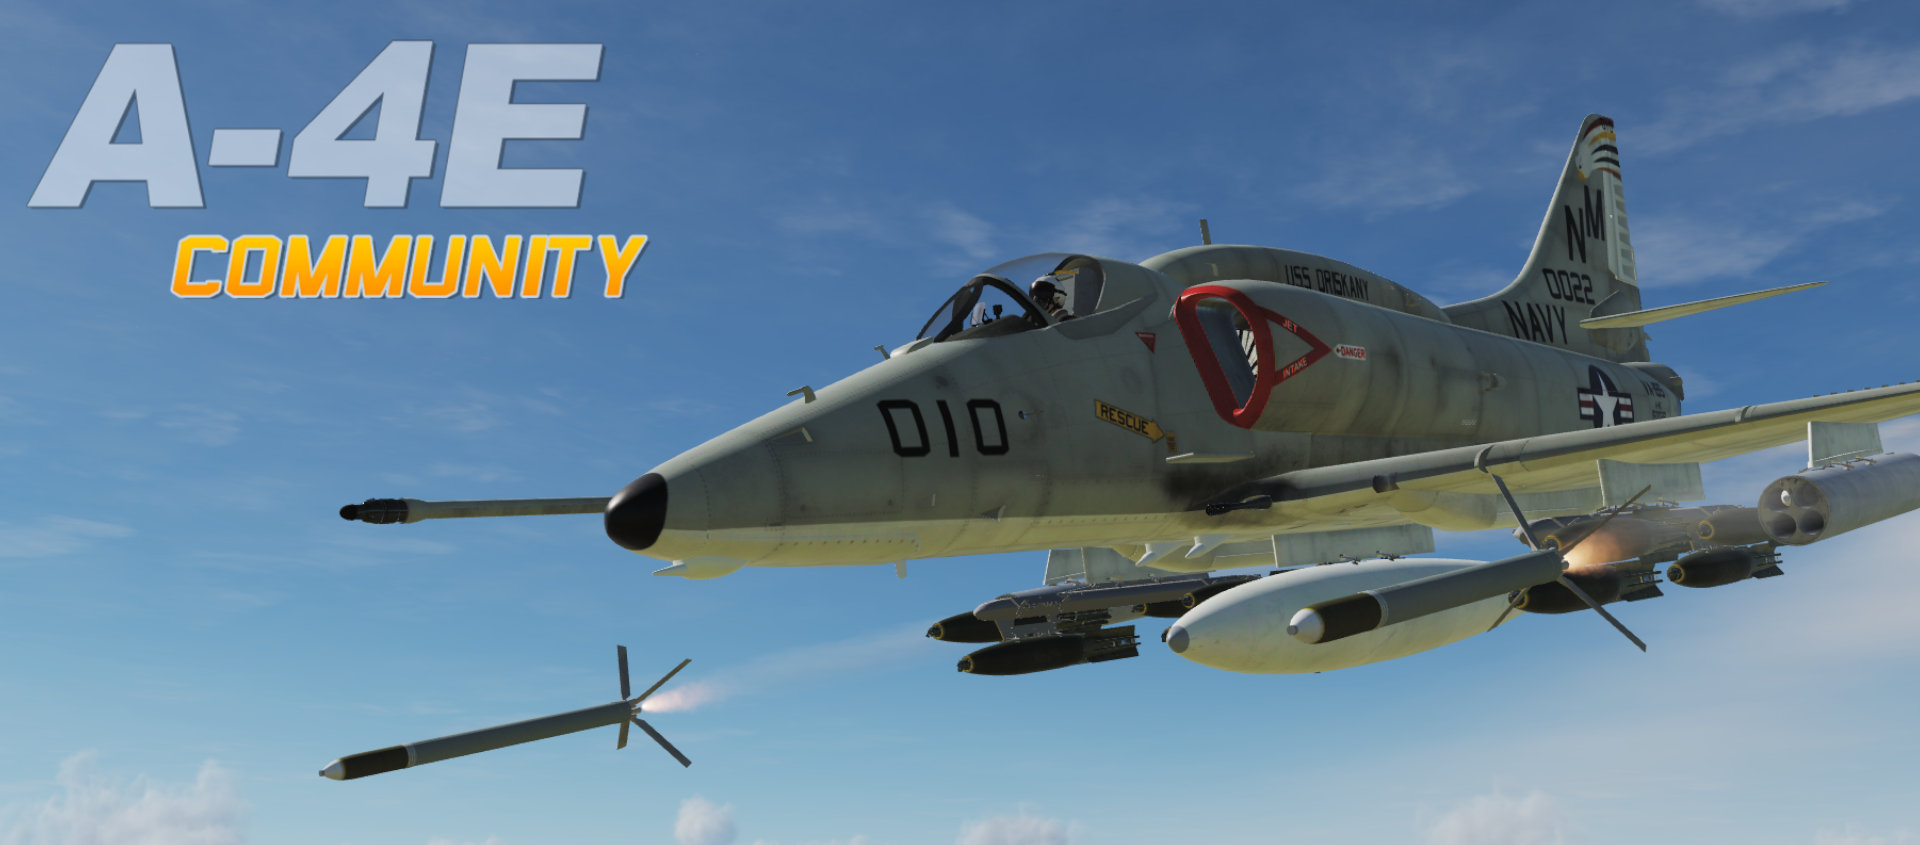 DCS A-4E Community Mod Release